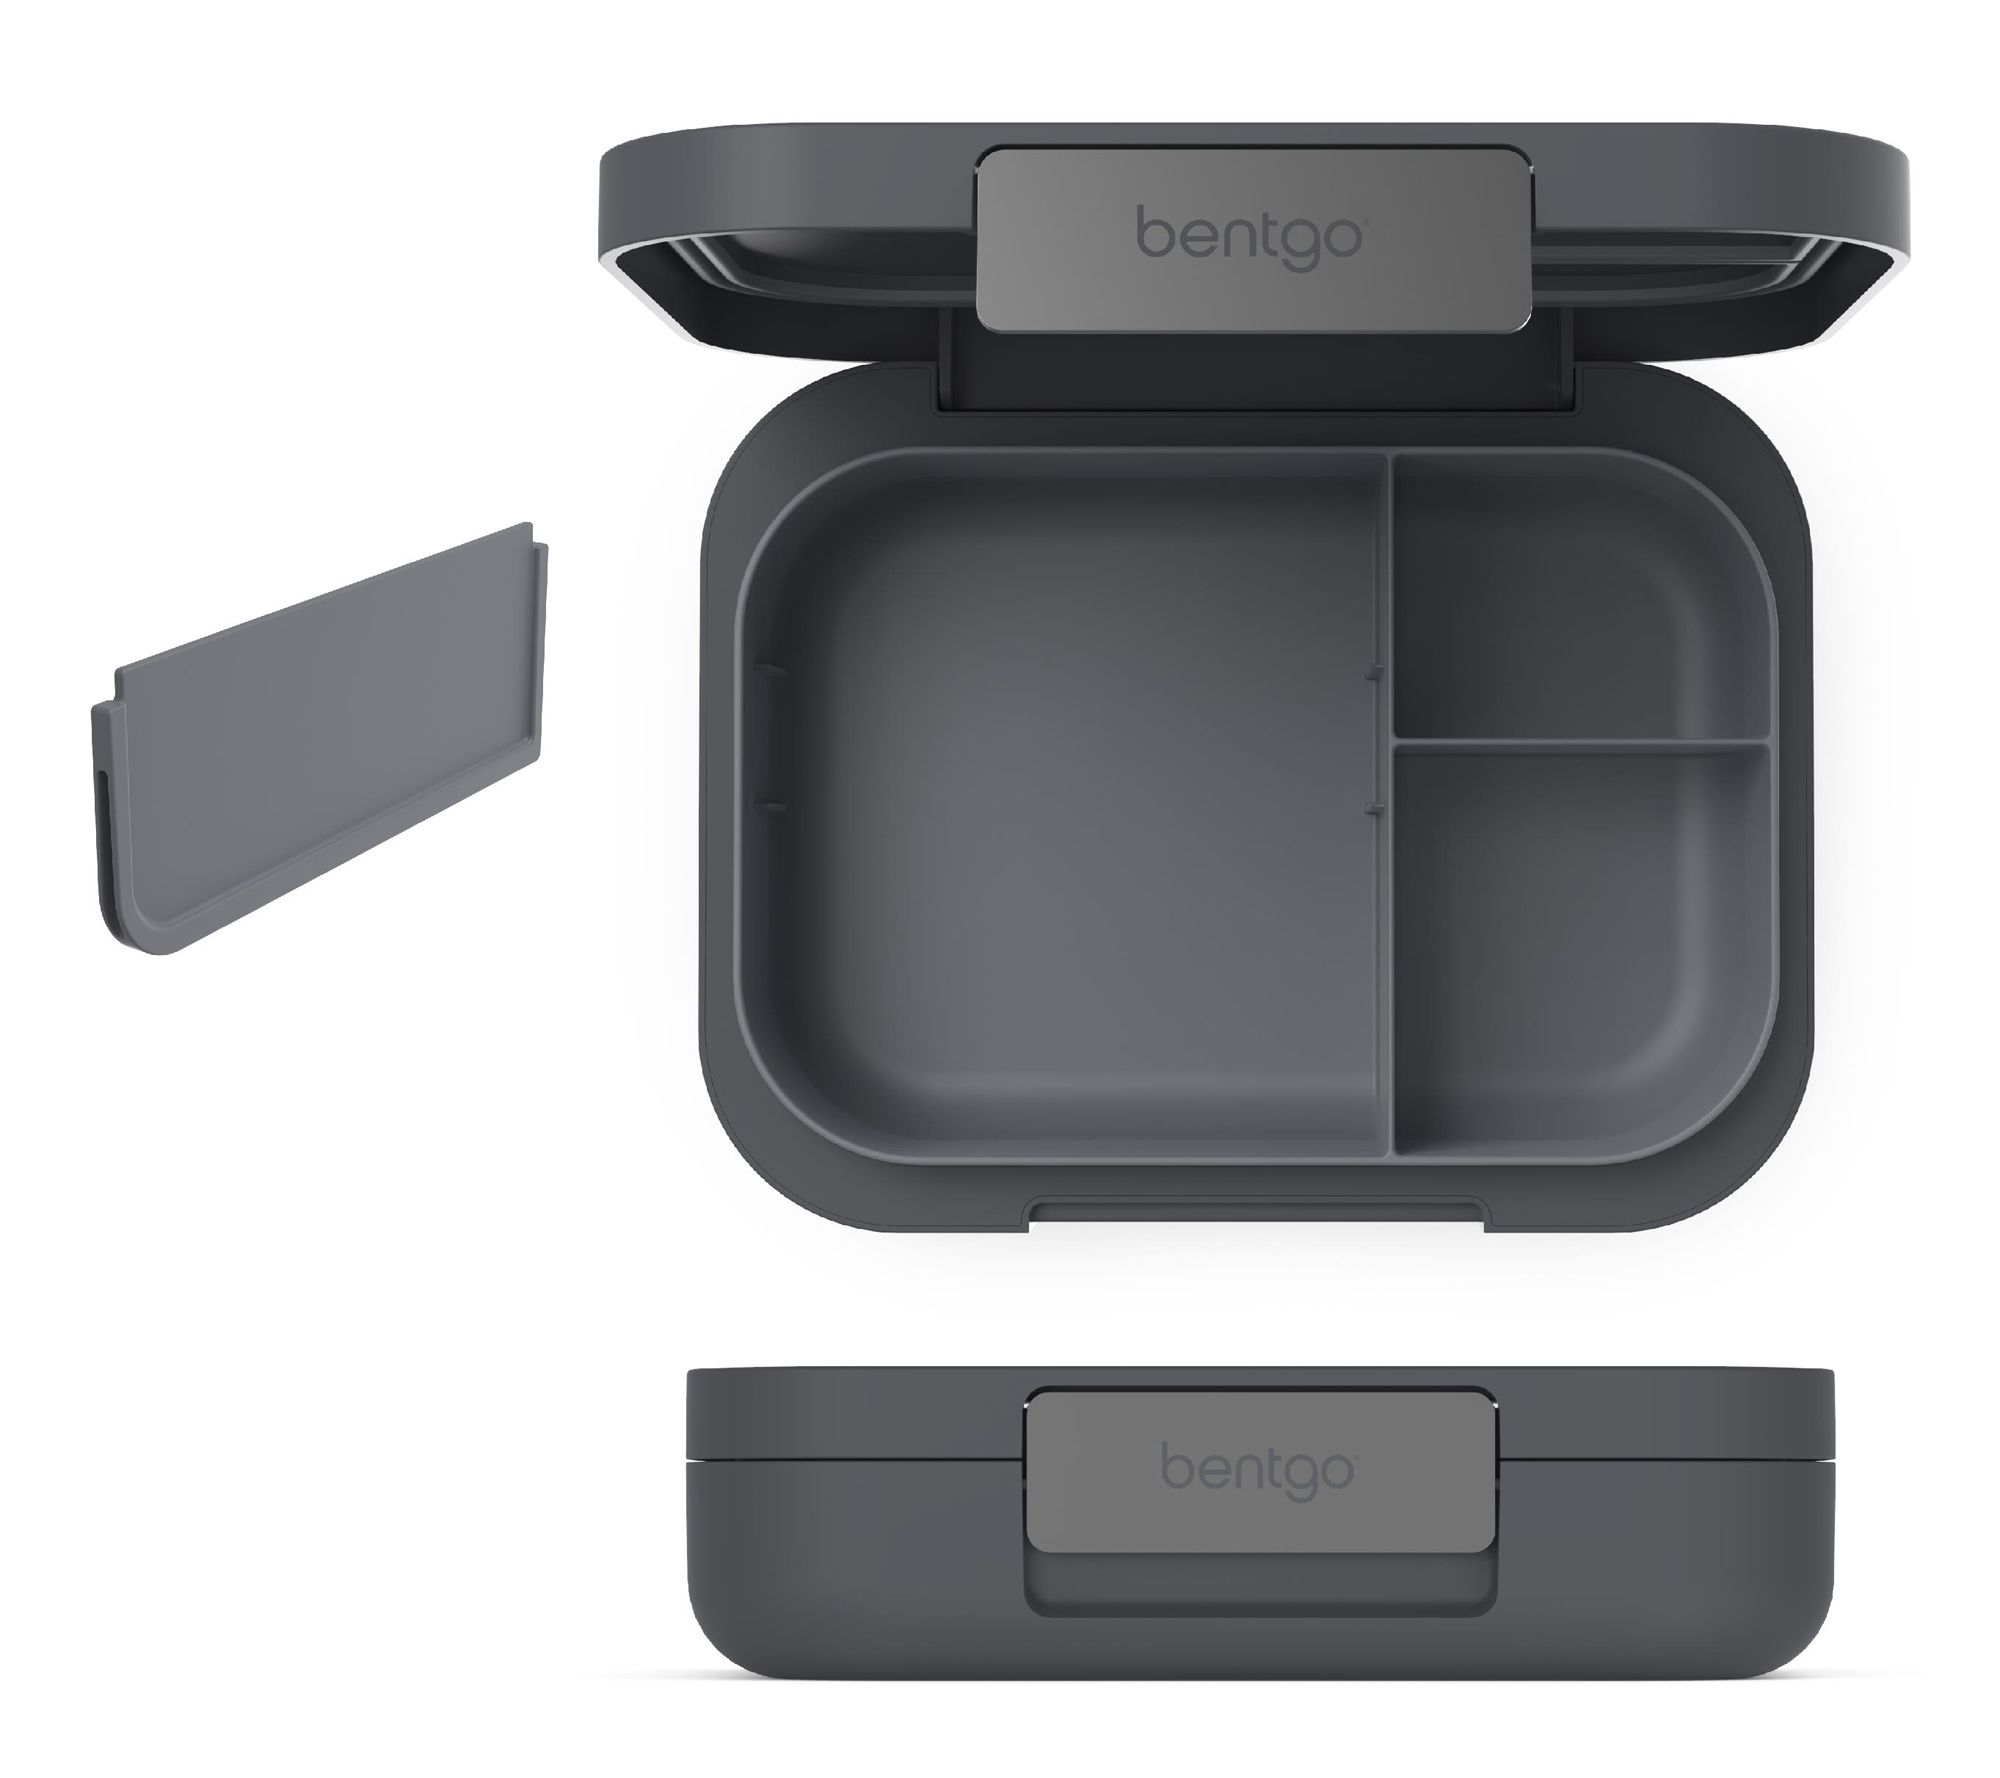 Bentgo Modern 4 Compartment Bento Style Leakproof Lunch Box - Dark